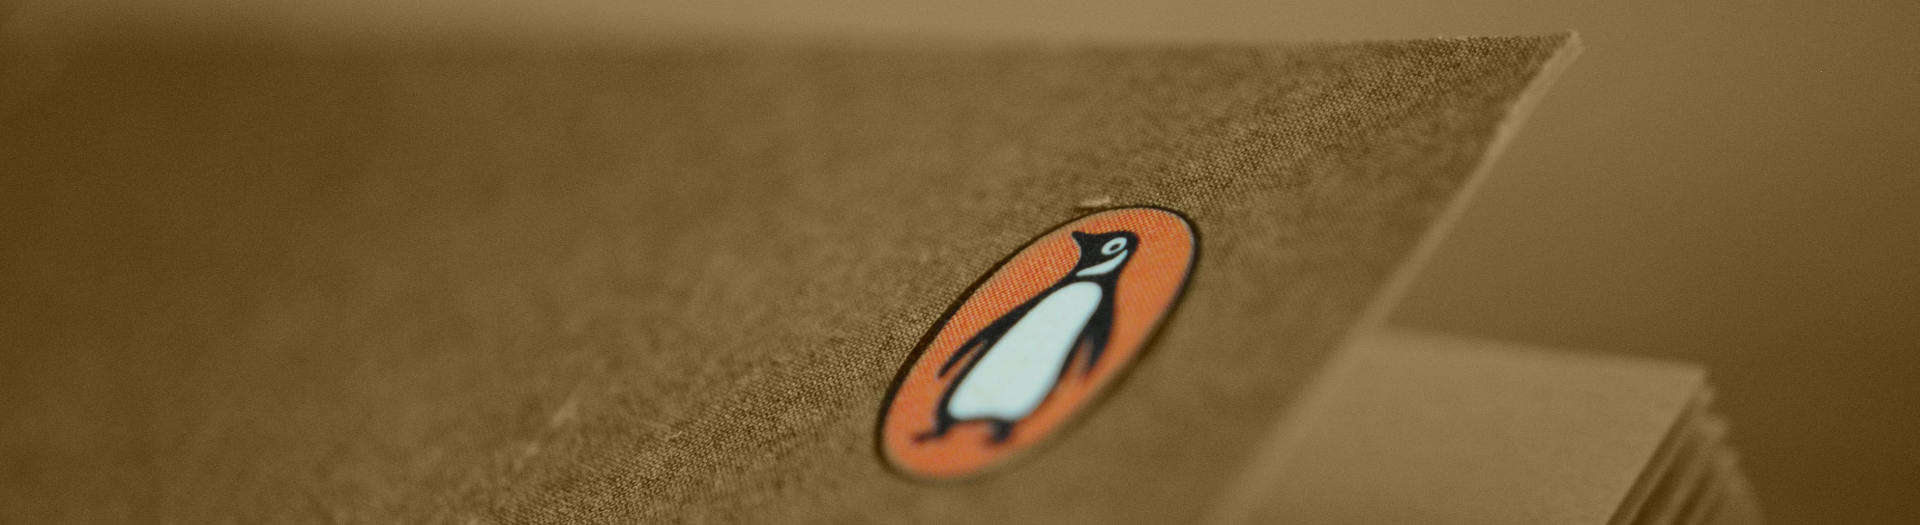 Penguin Book Design header 1920 x 525